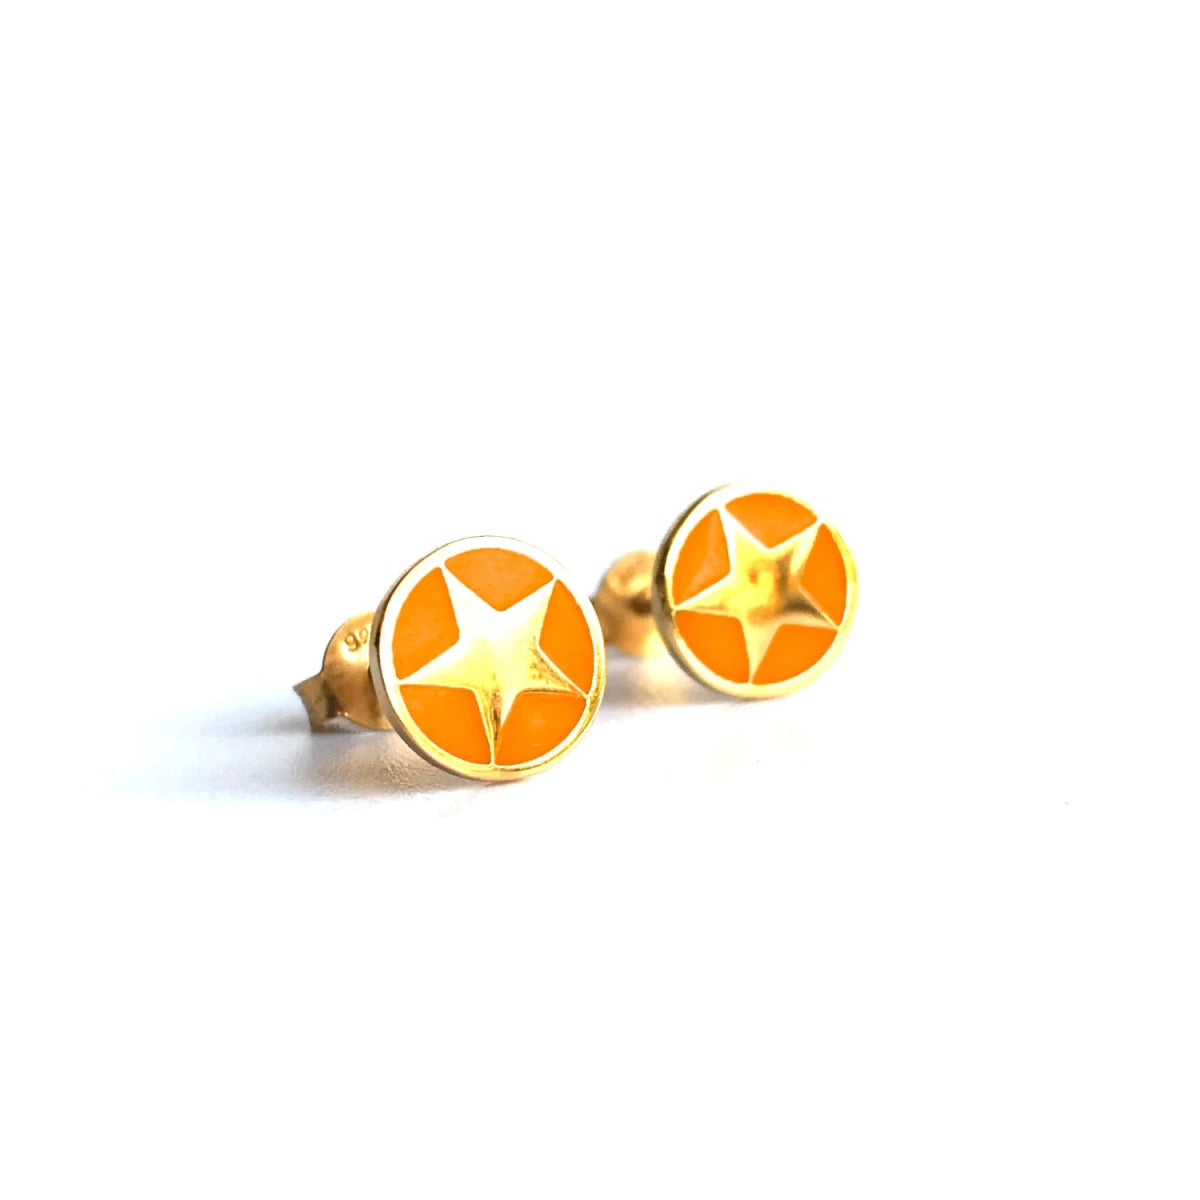 Enamel Star Stud Earrings Gold Vermeil - Orange